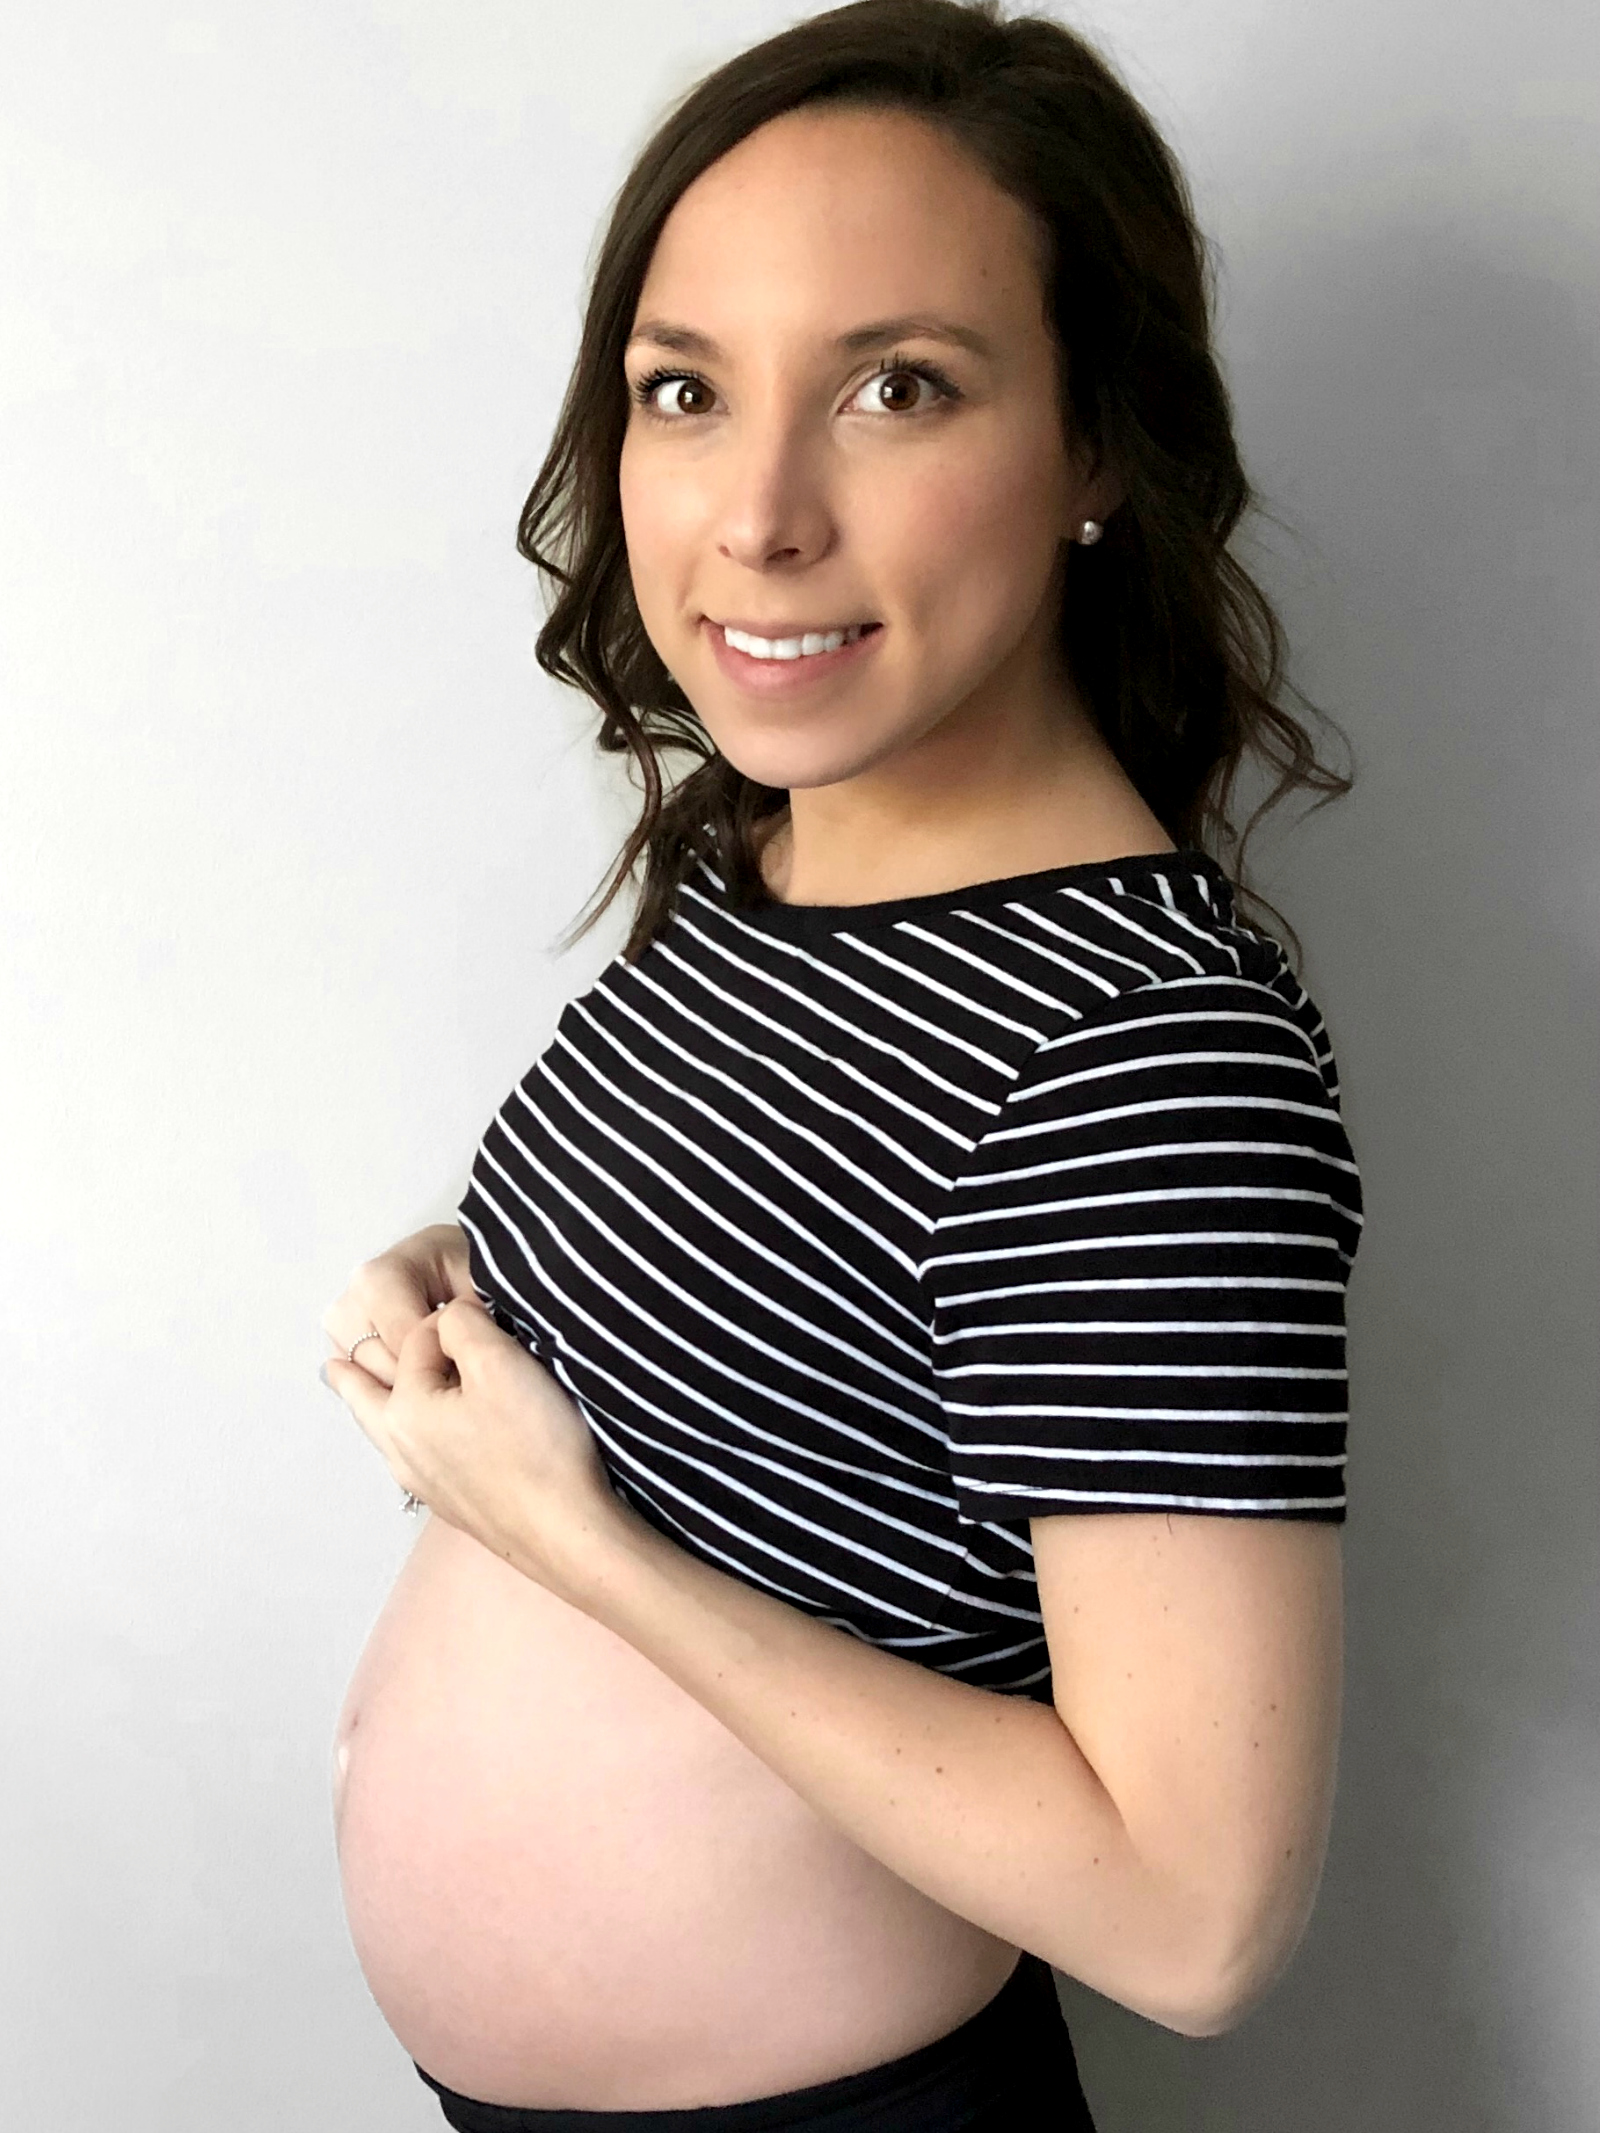 pregnancy update simply-nicole.com